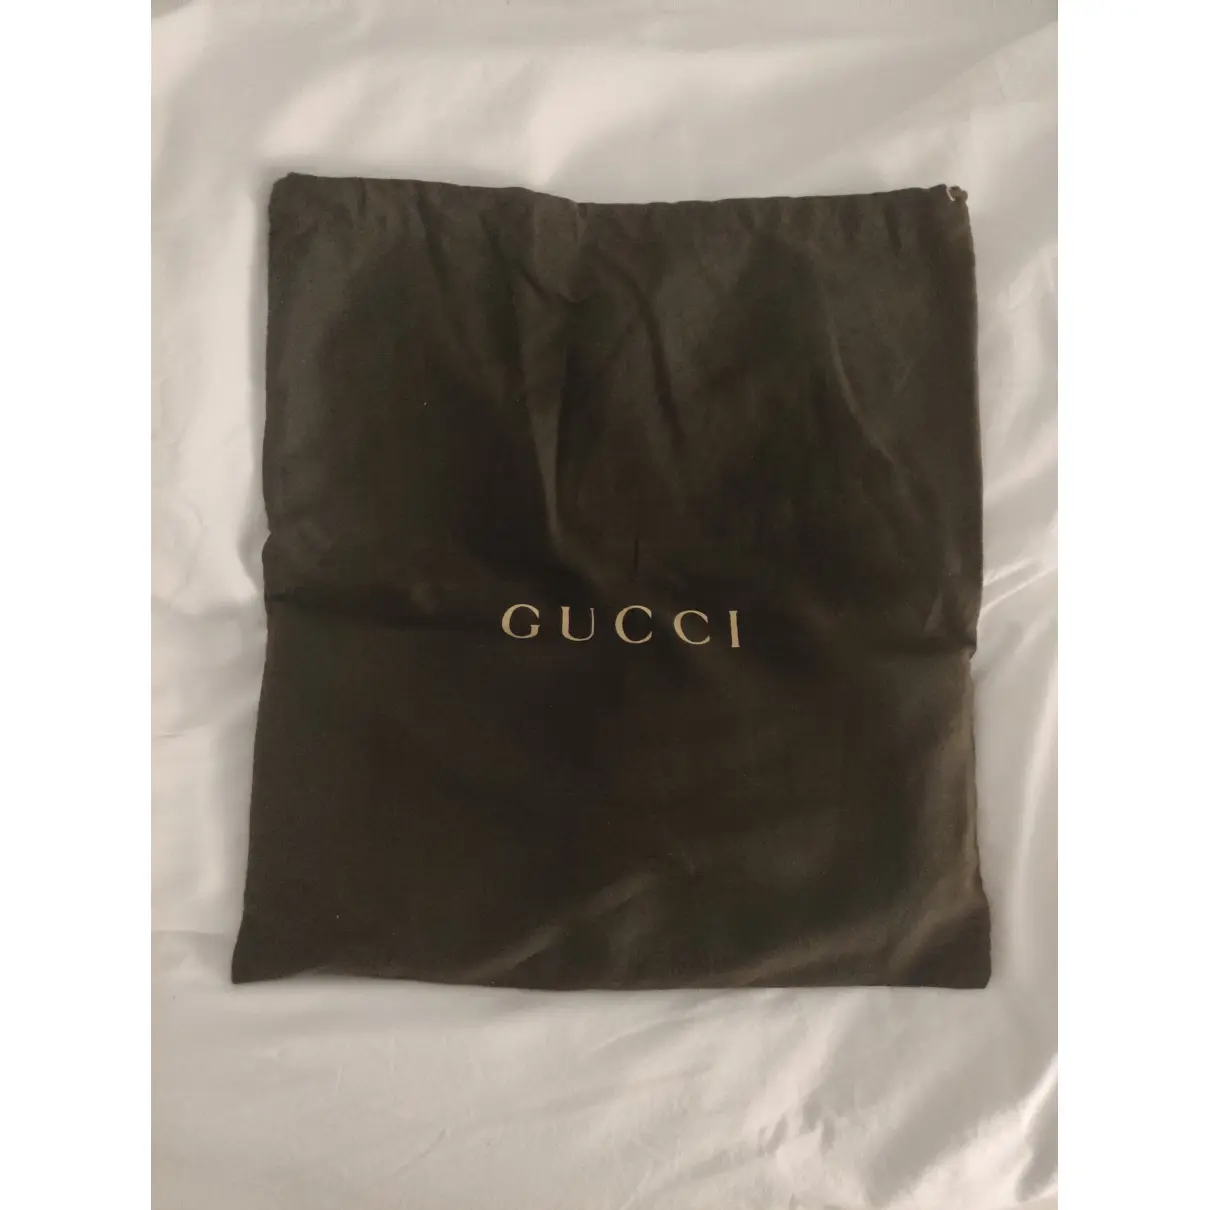 1973 leather clutch bag Gucci